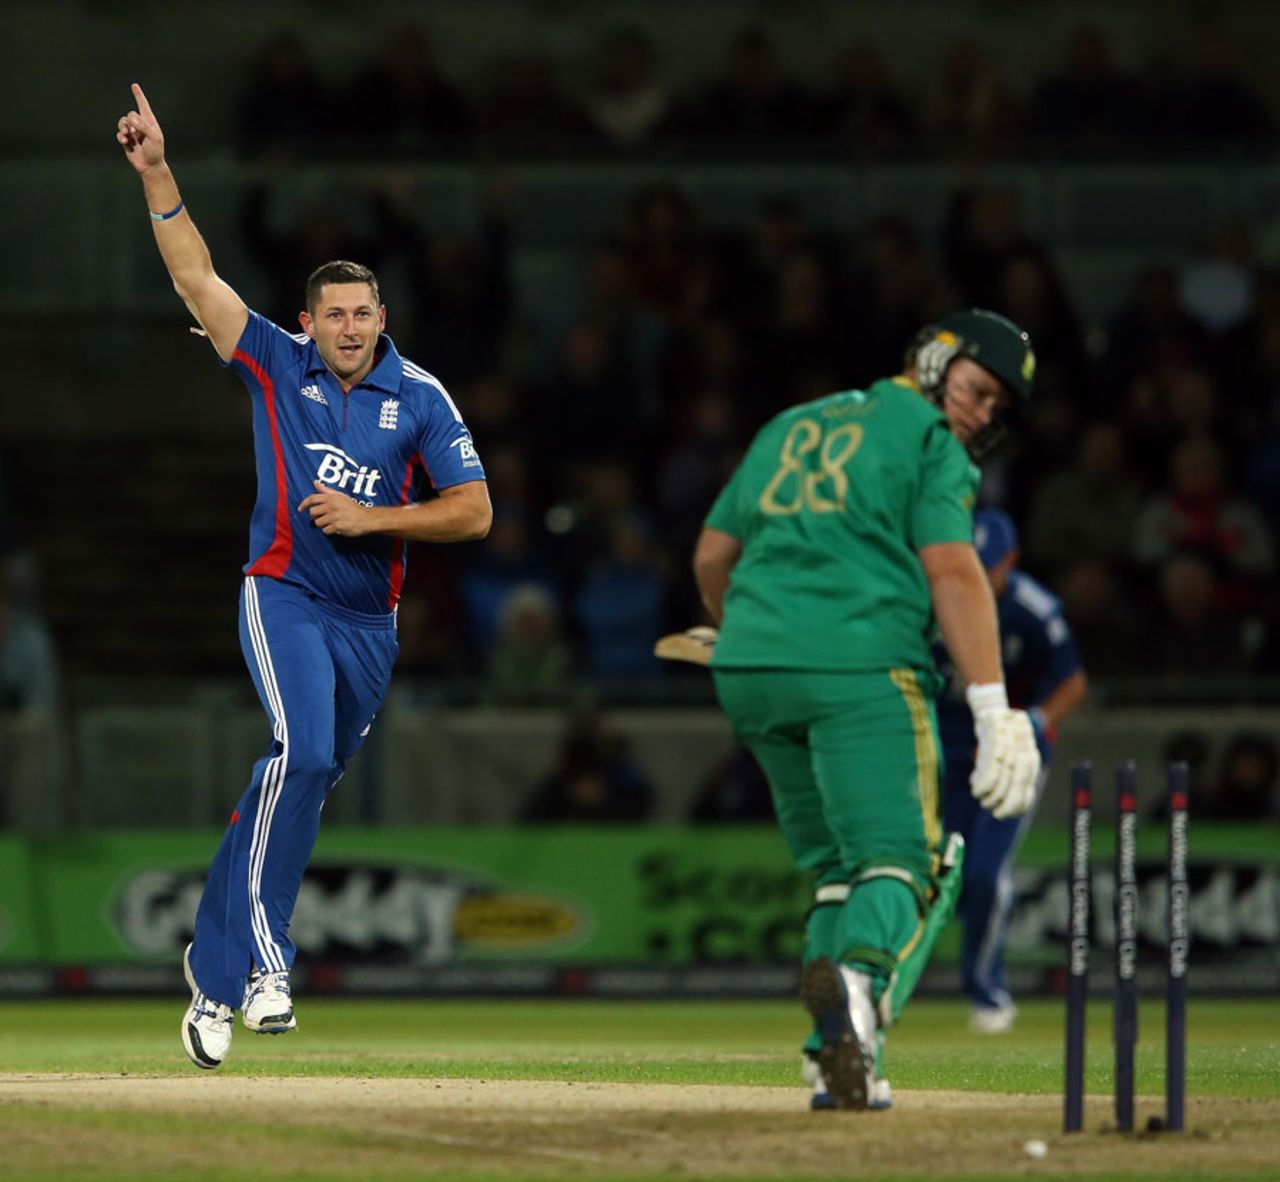 Tim Bresnan bowled Richard Levi early in the chase, England v South Africa, 3rd T20 international, Edgbaston, September 12, 2012